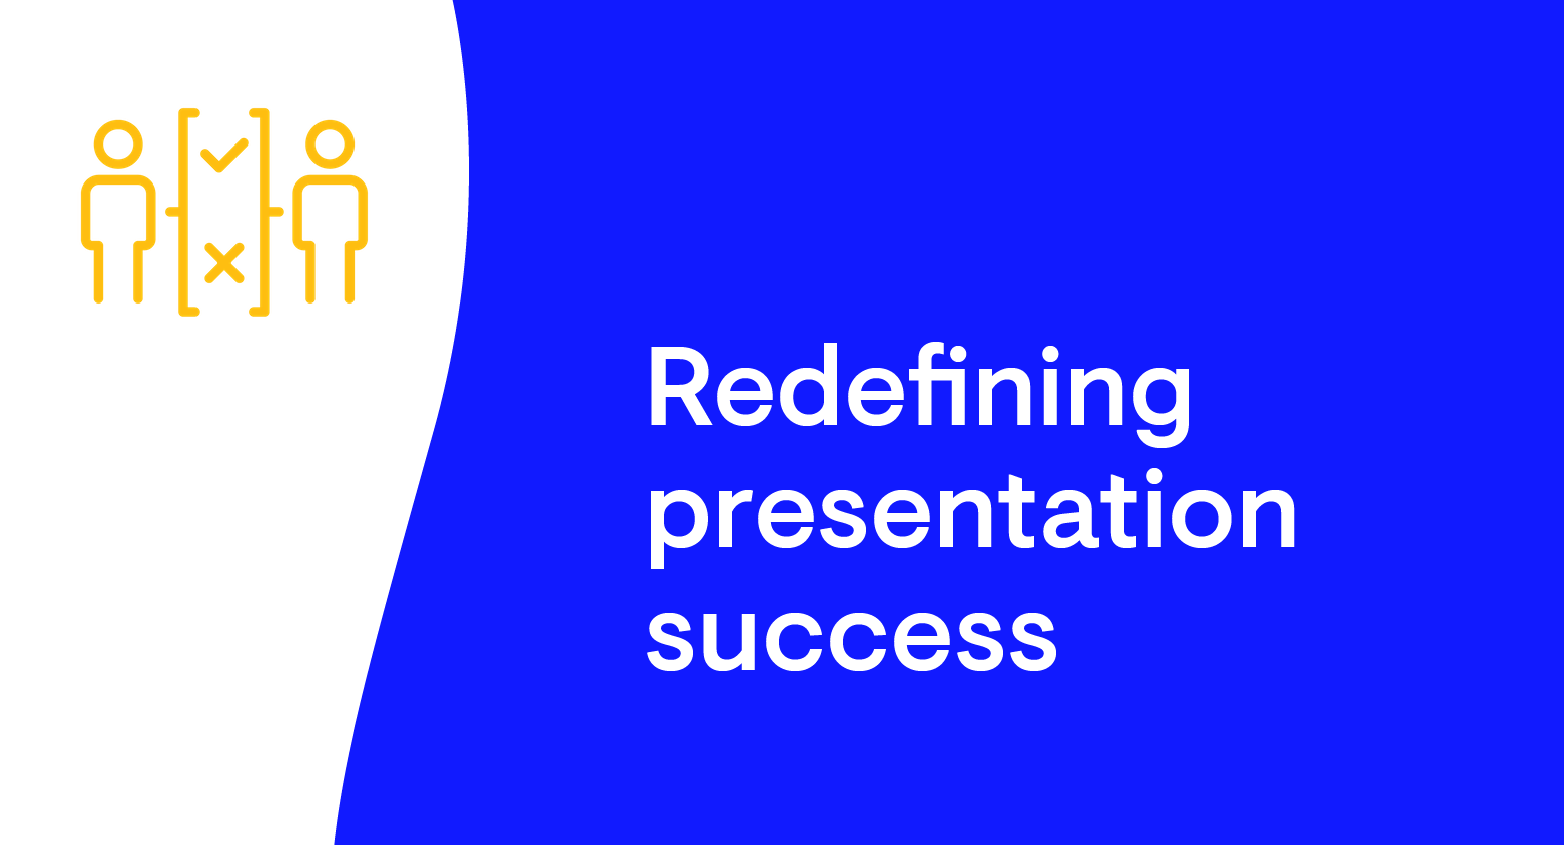 Redefining Presentation Success